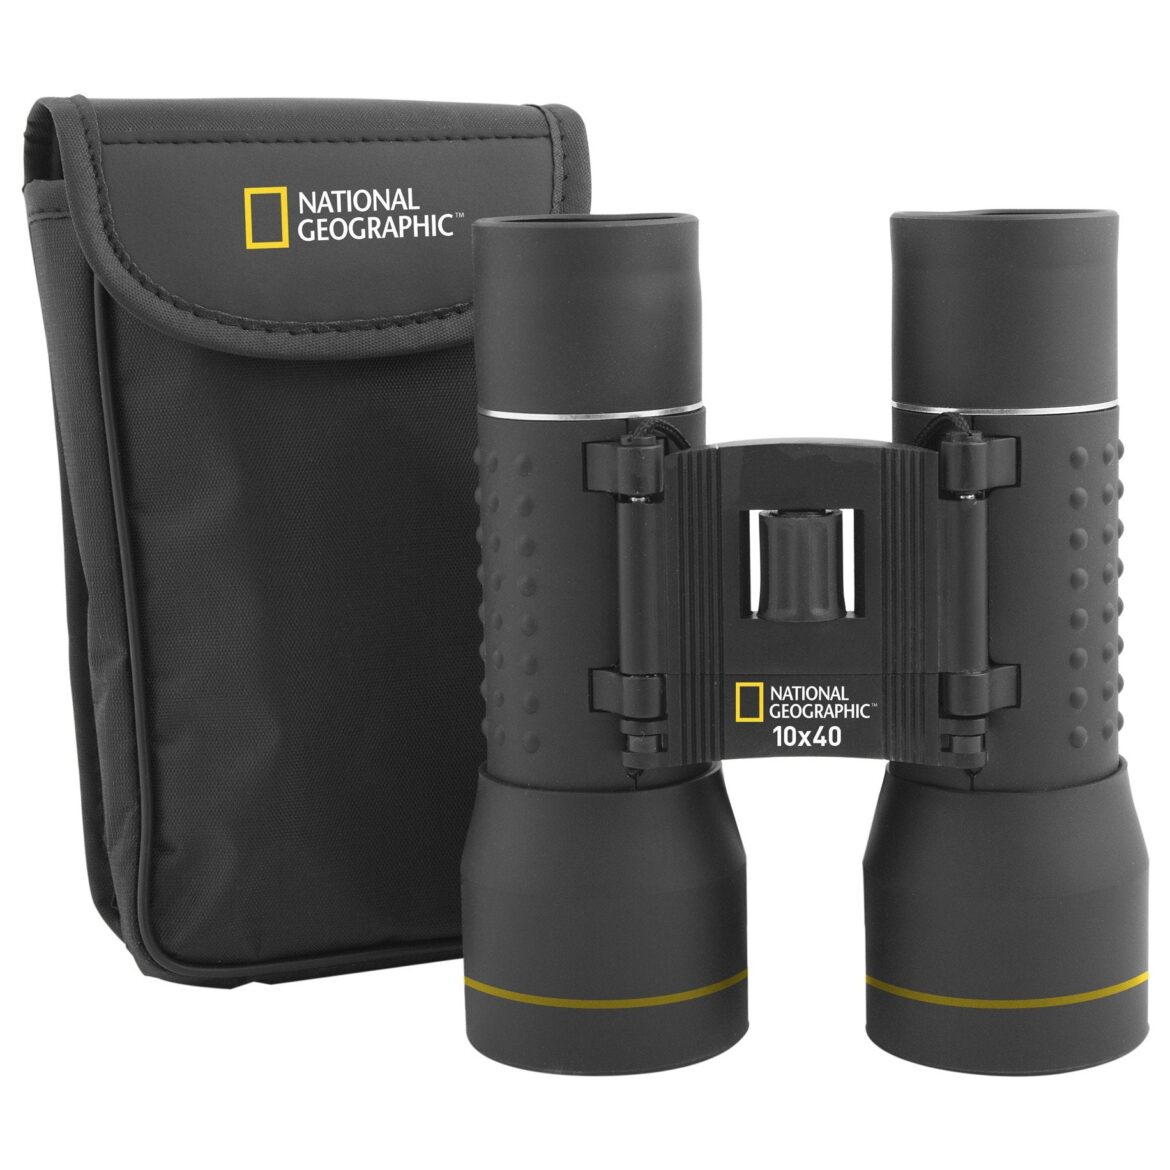 National Geographic 10×40 Binoculars